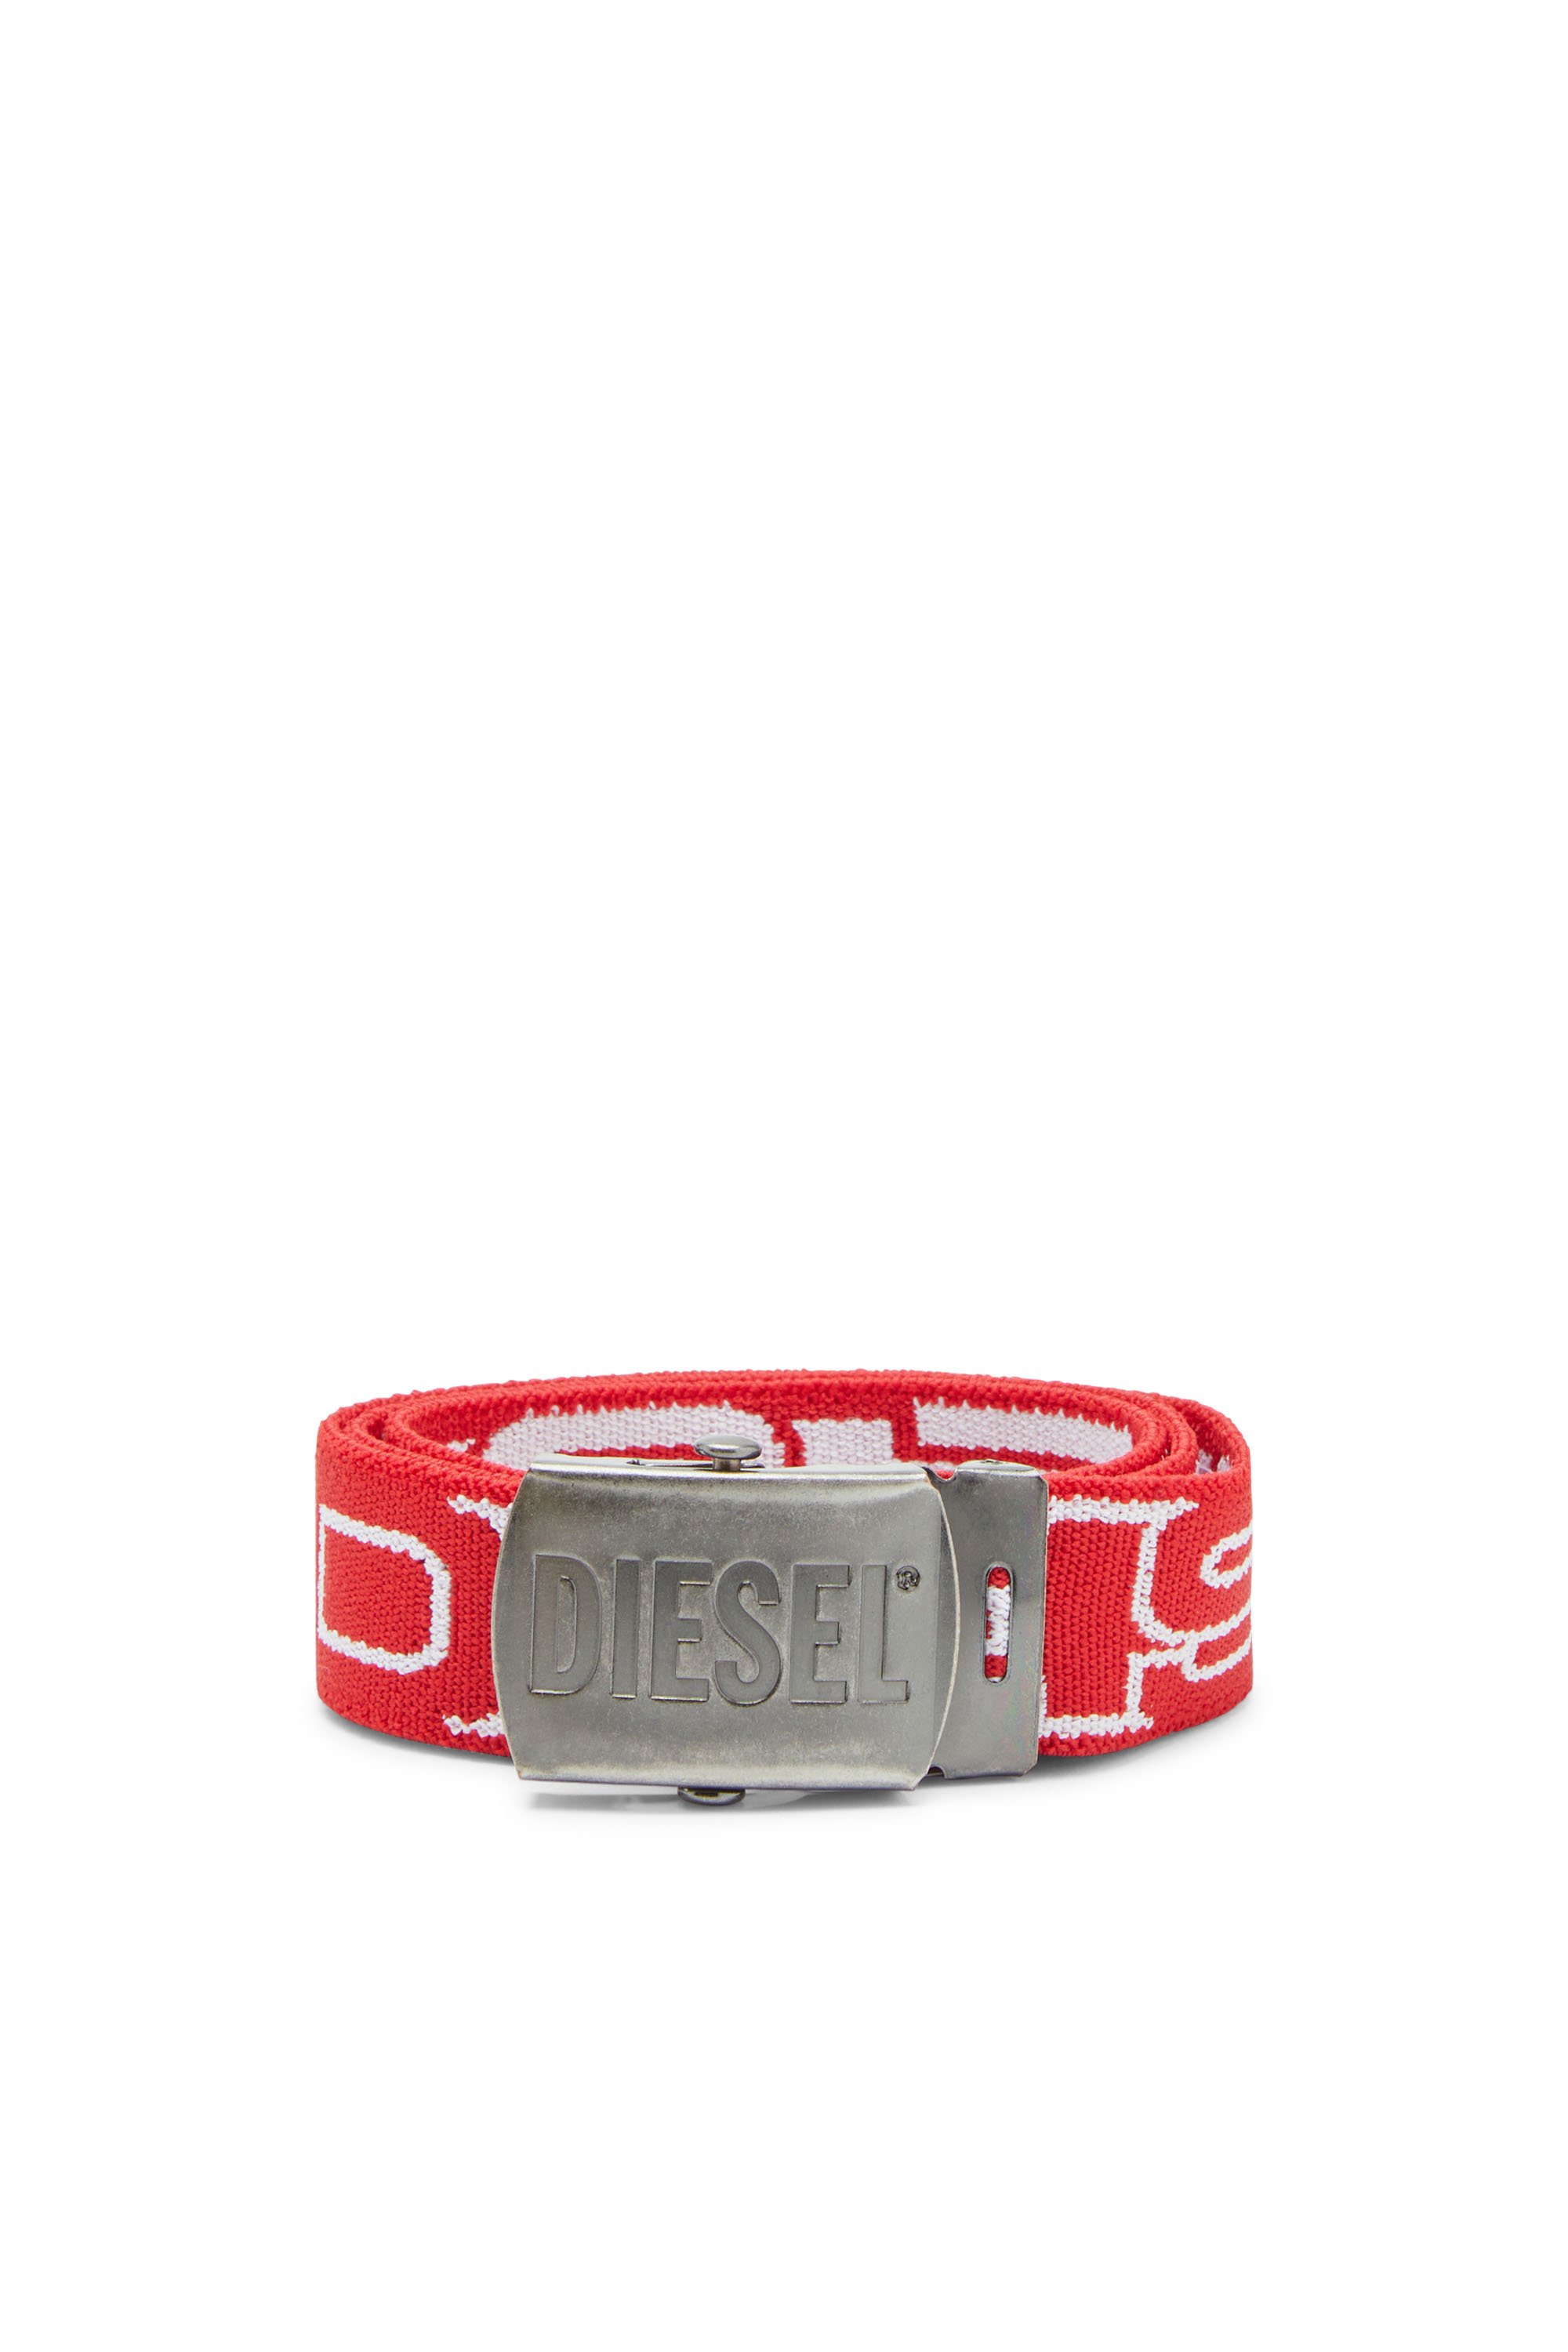 Diesel - BIEBY, Rosso - Image 1